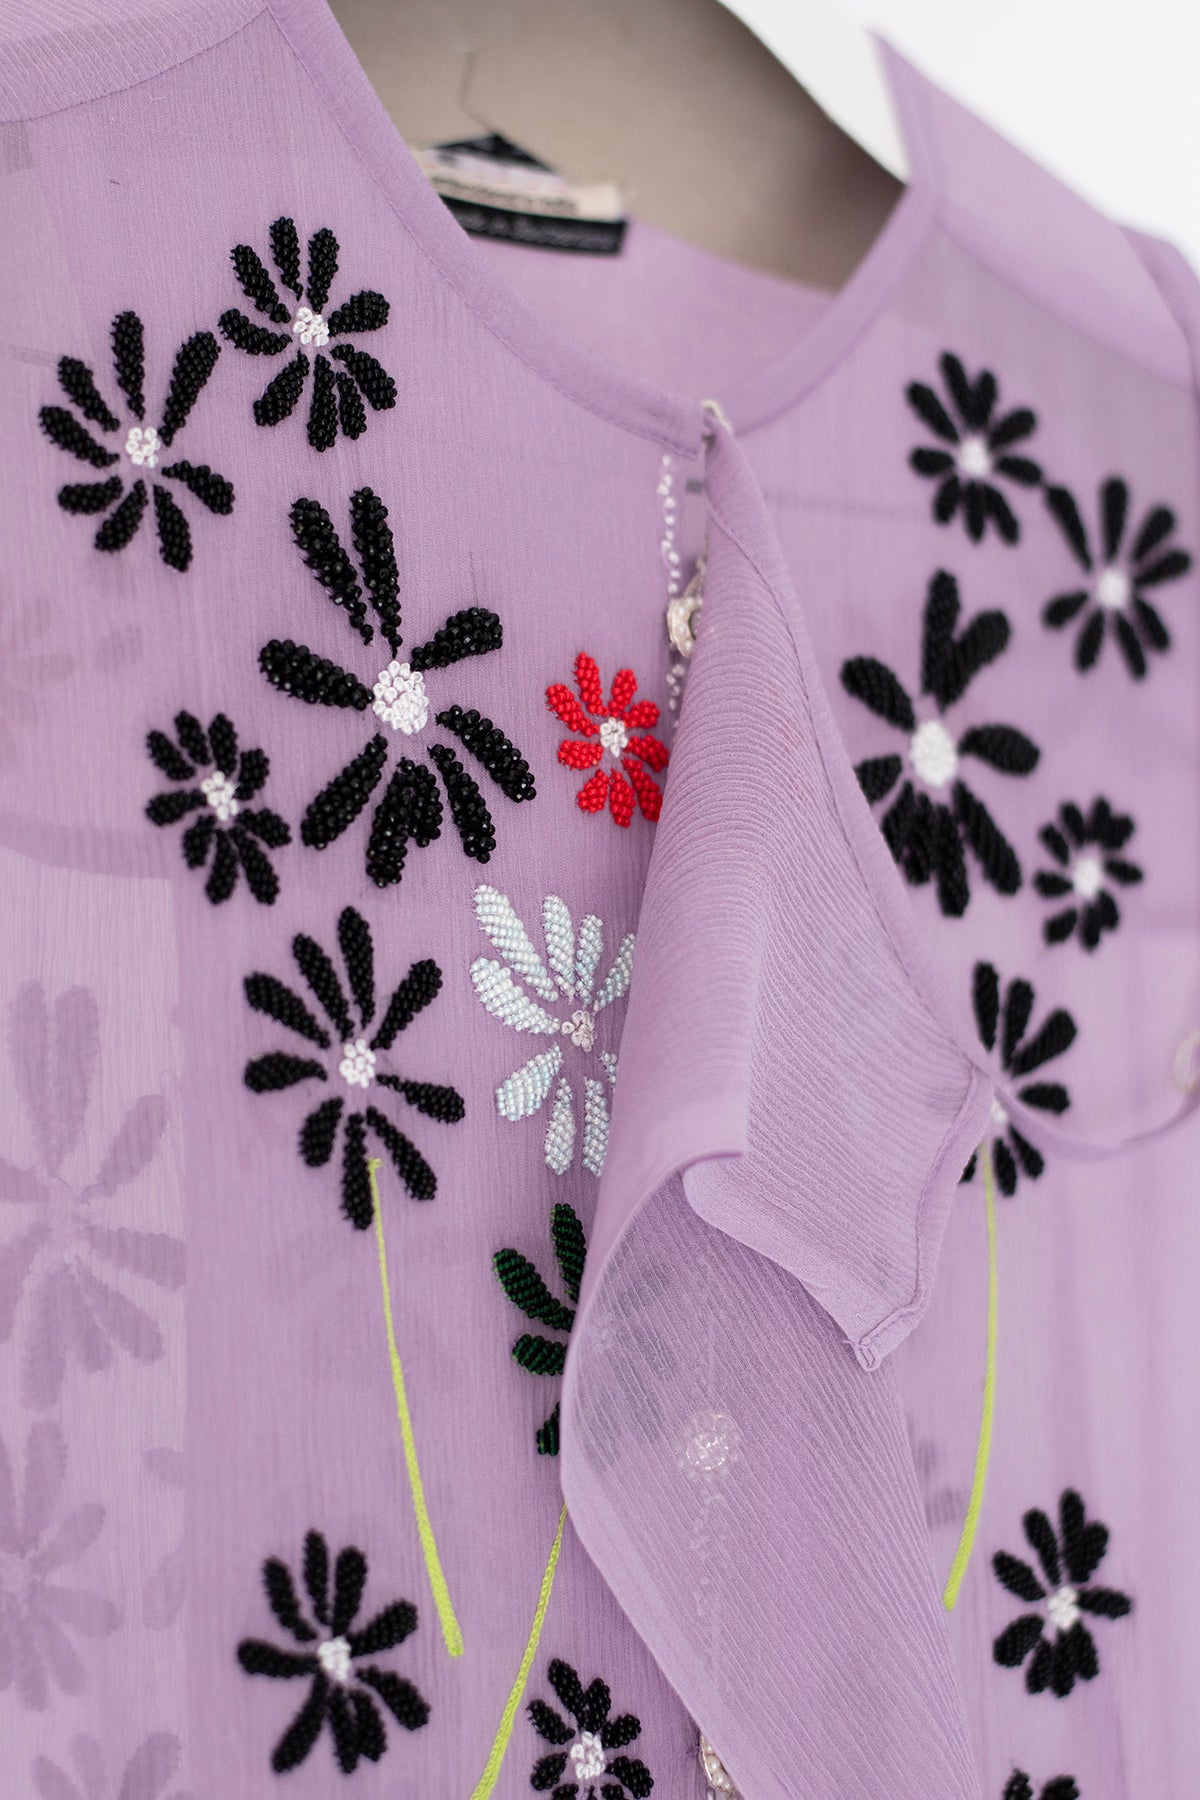 Natural dye silk chiffon flower power armor embroidered vest